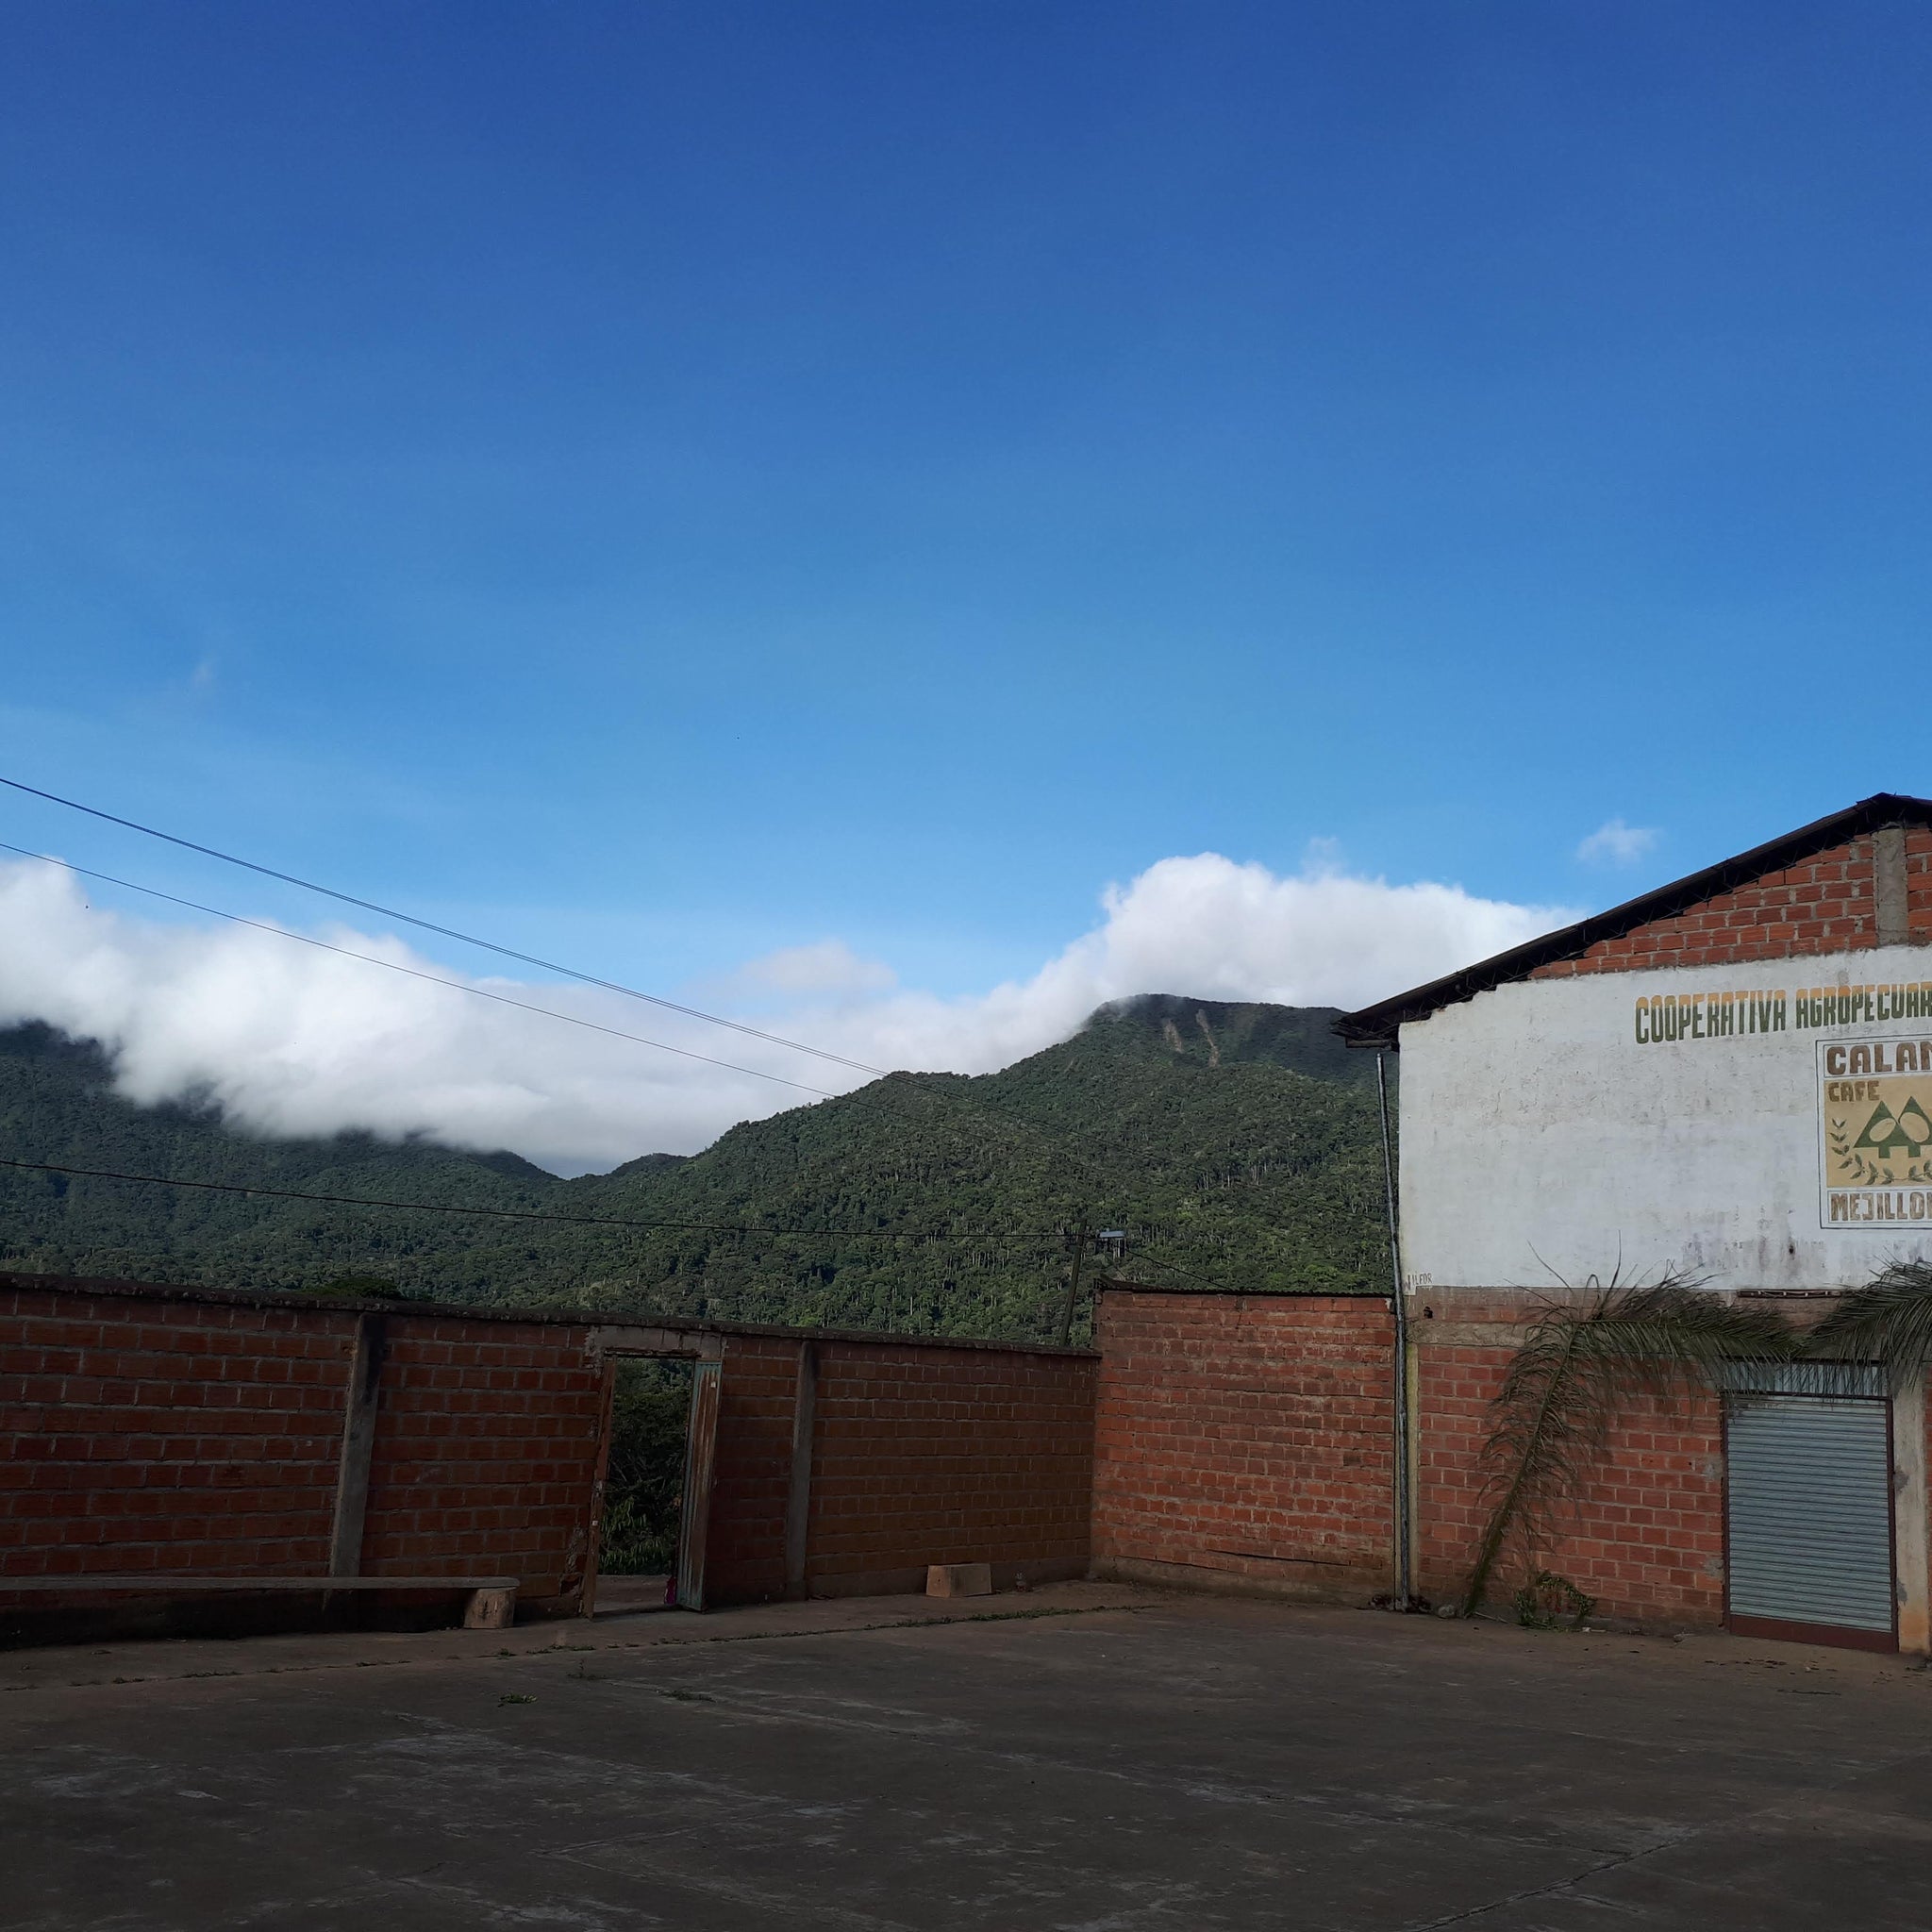 Bolivia Mejillones cooperative headquarter building.